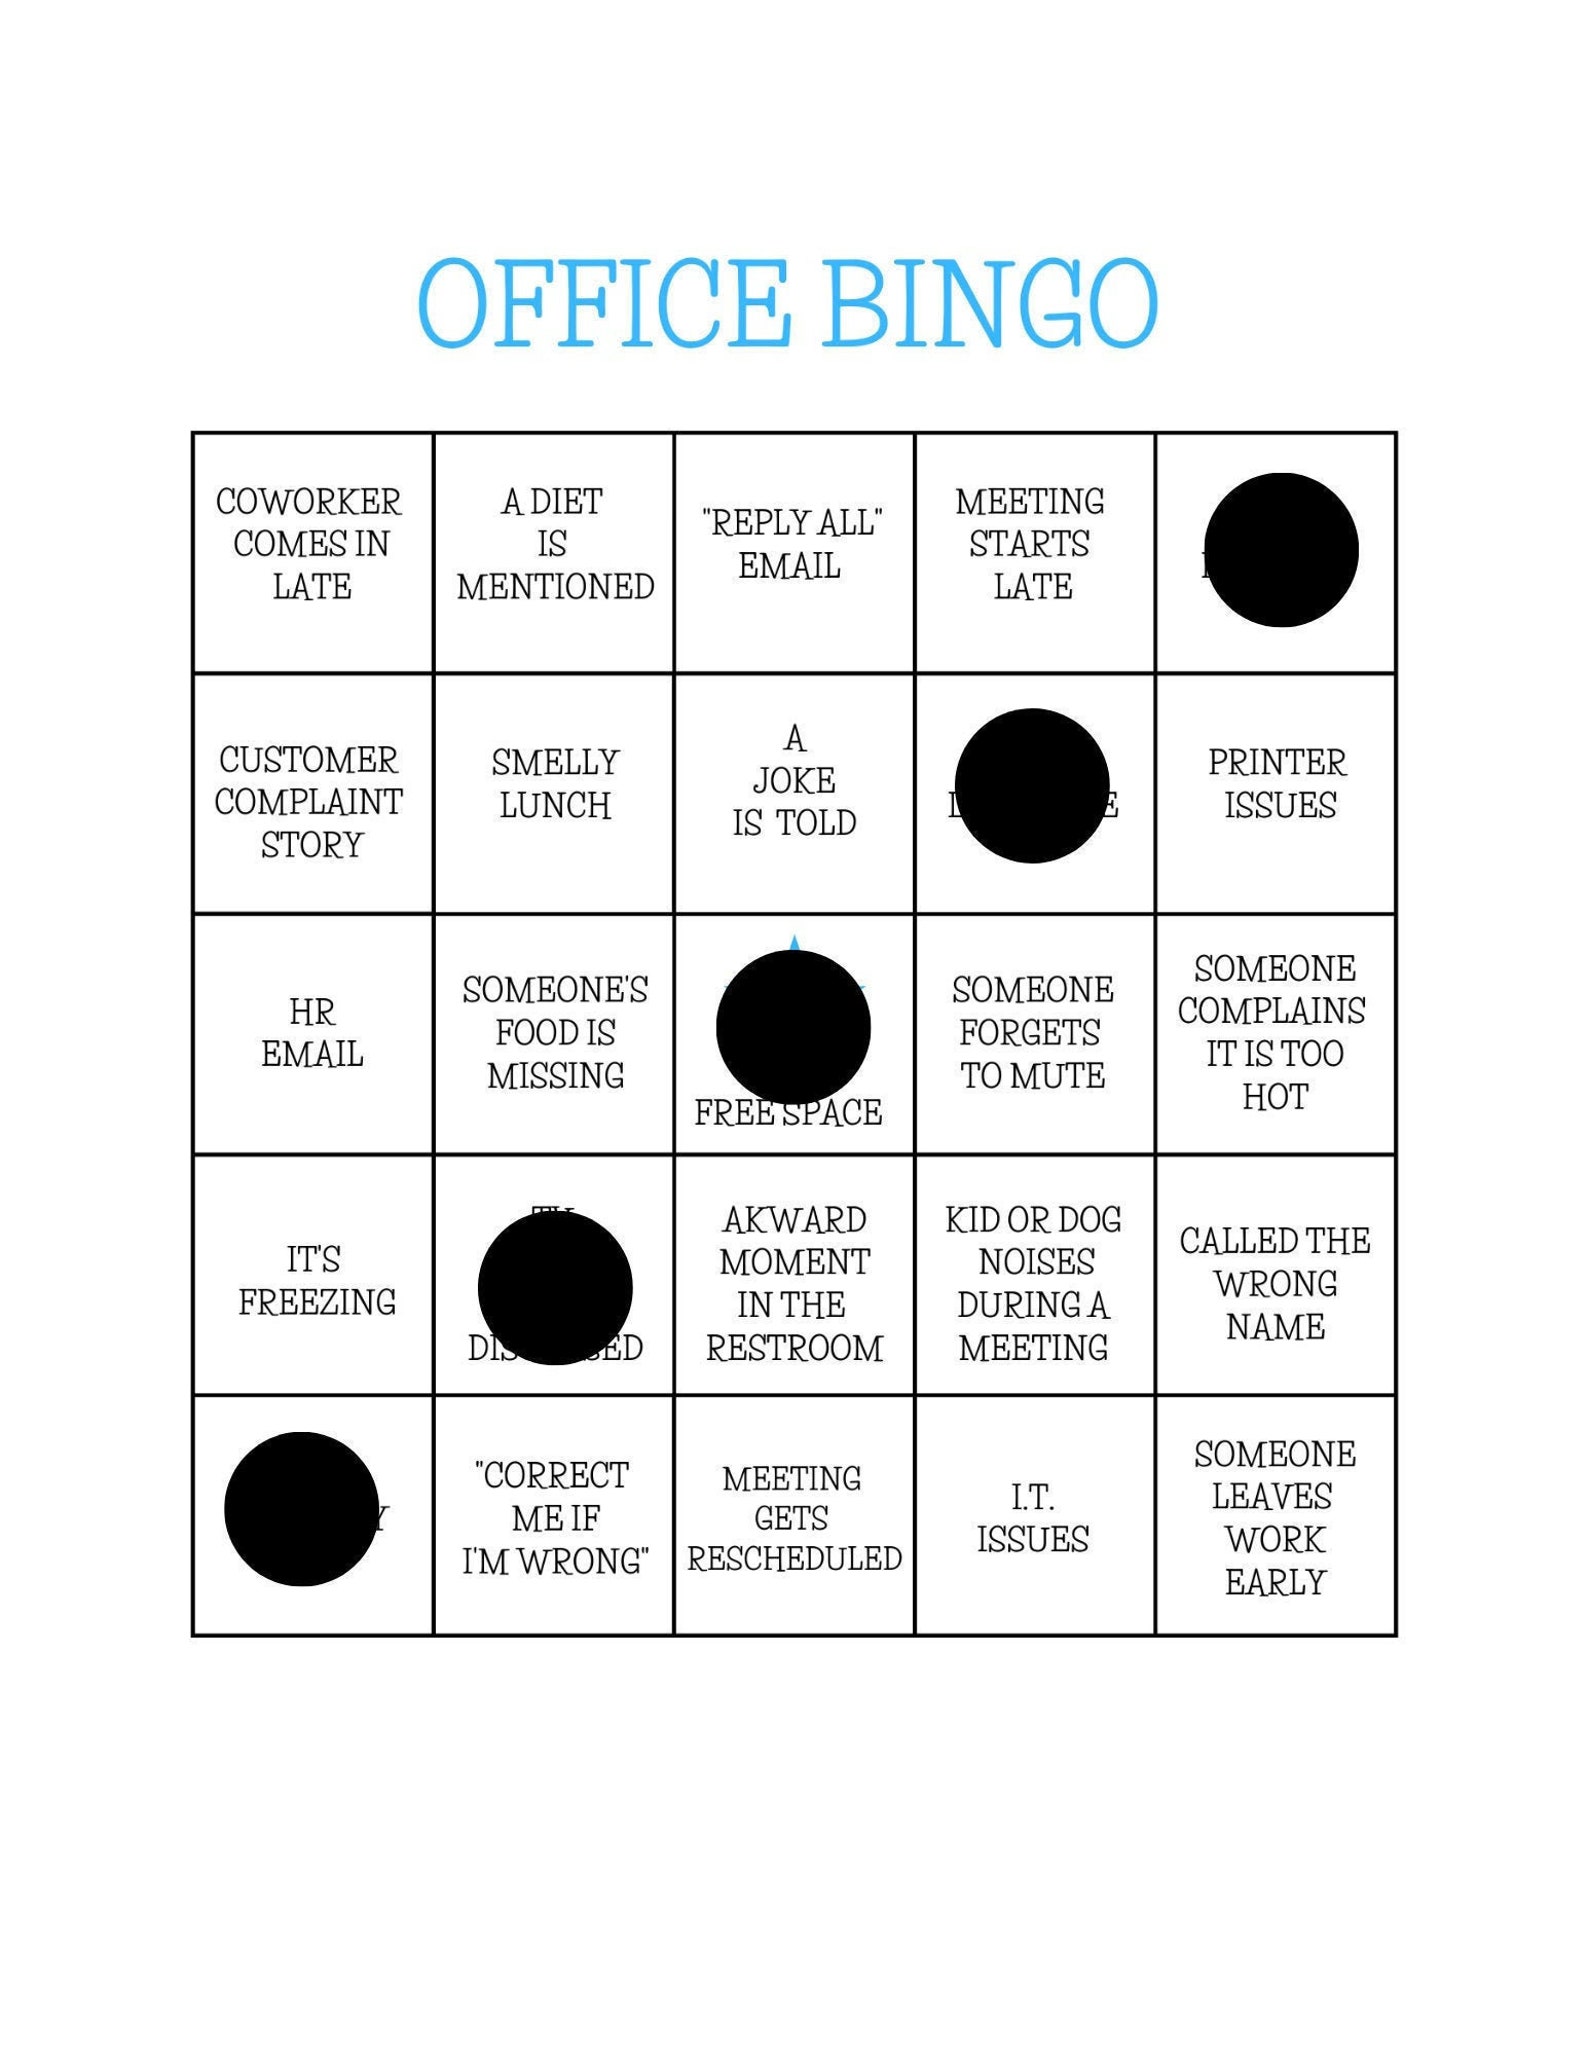 Office Bingo Work Icebreaker Game Work Game Work Bingo Office Fun Game Team Building Game